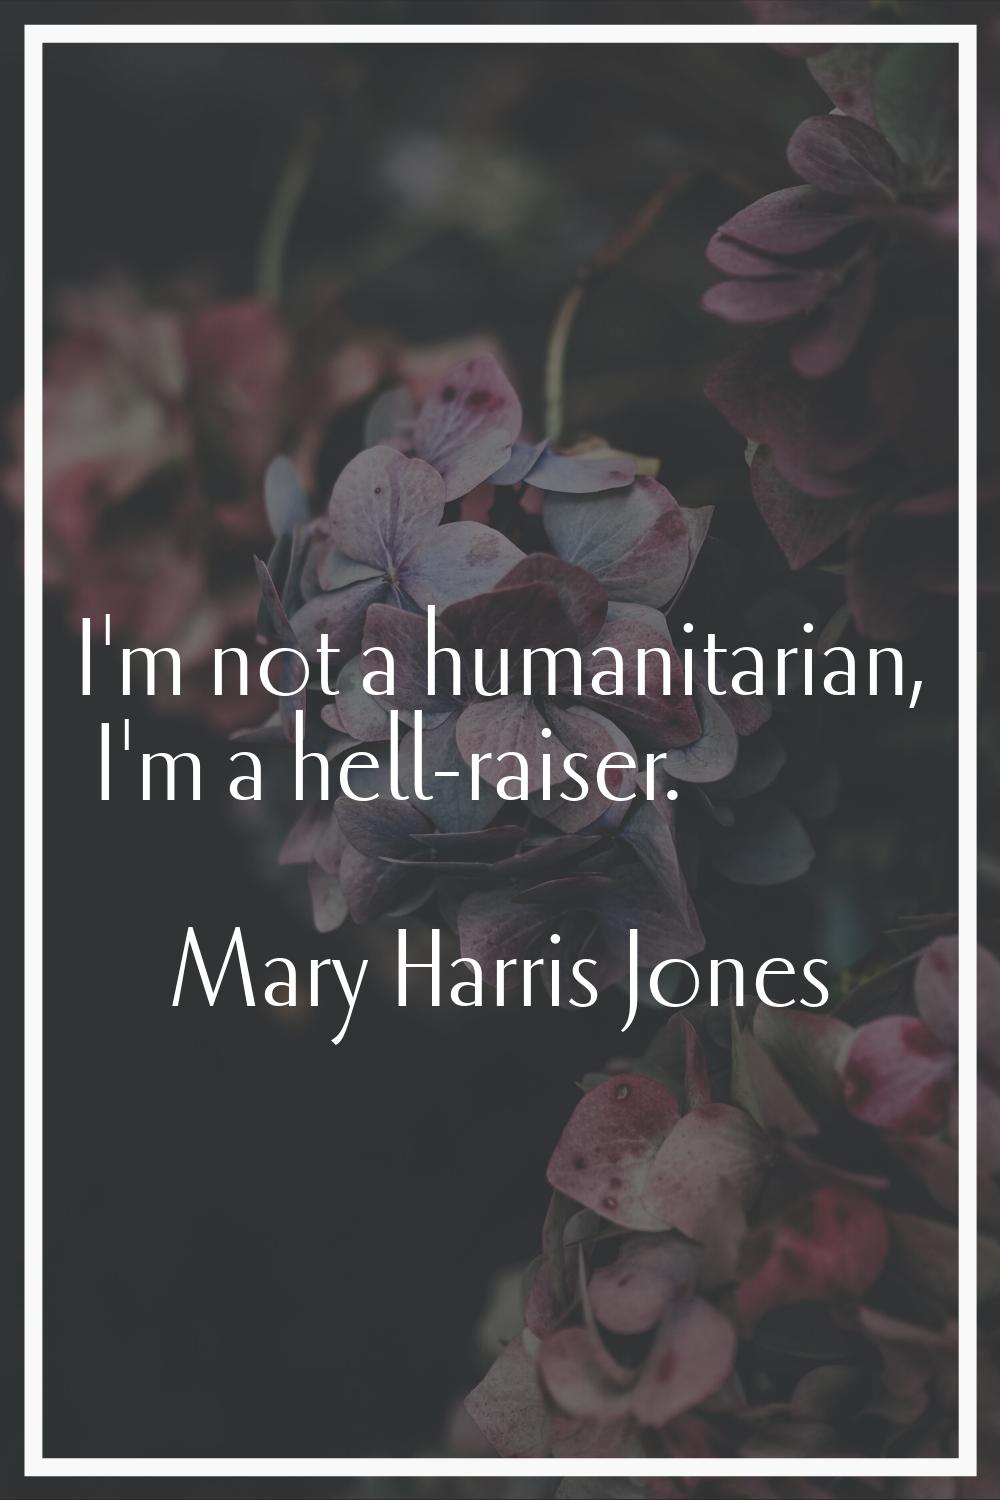 I'm not a humanitarian, I'm a hell-raiser.